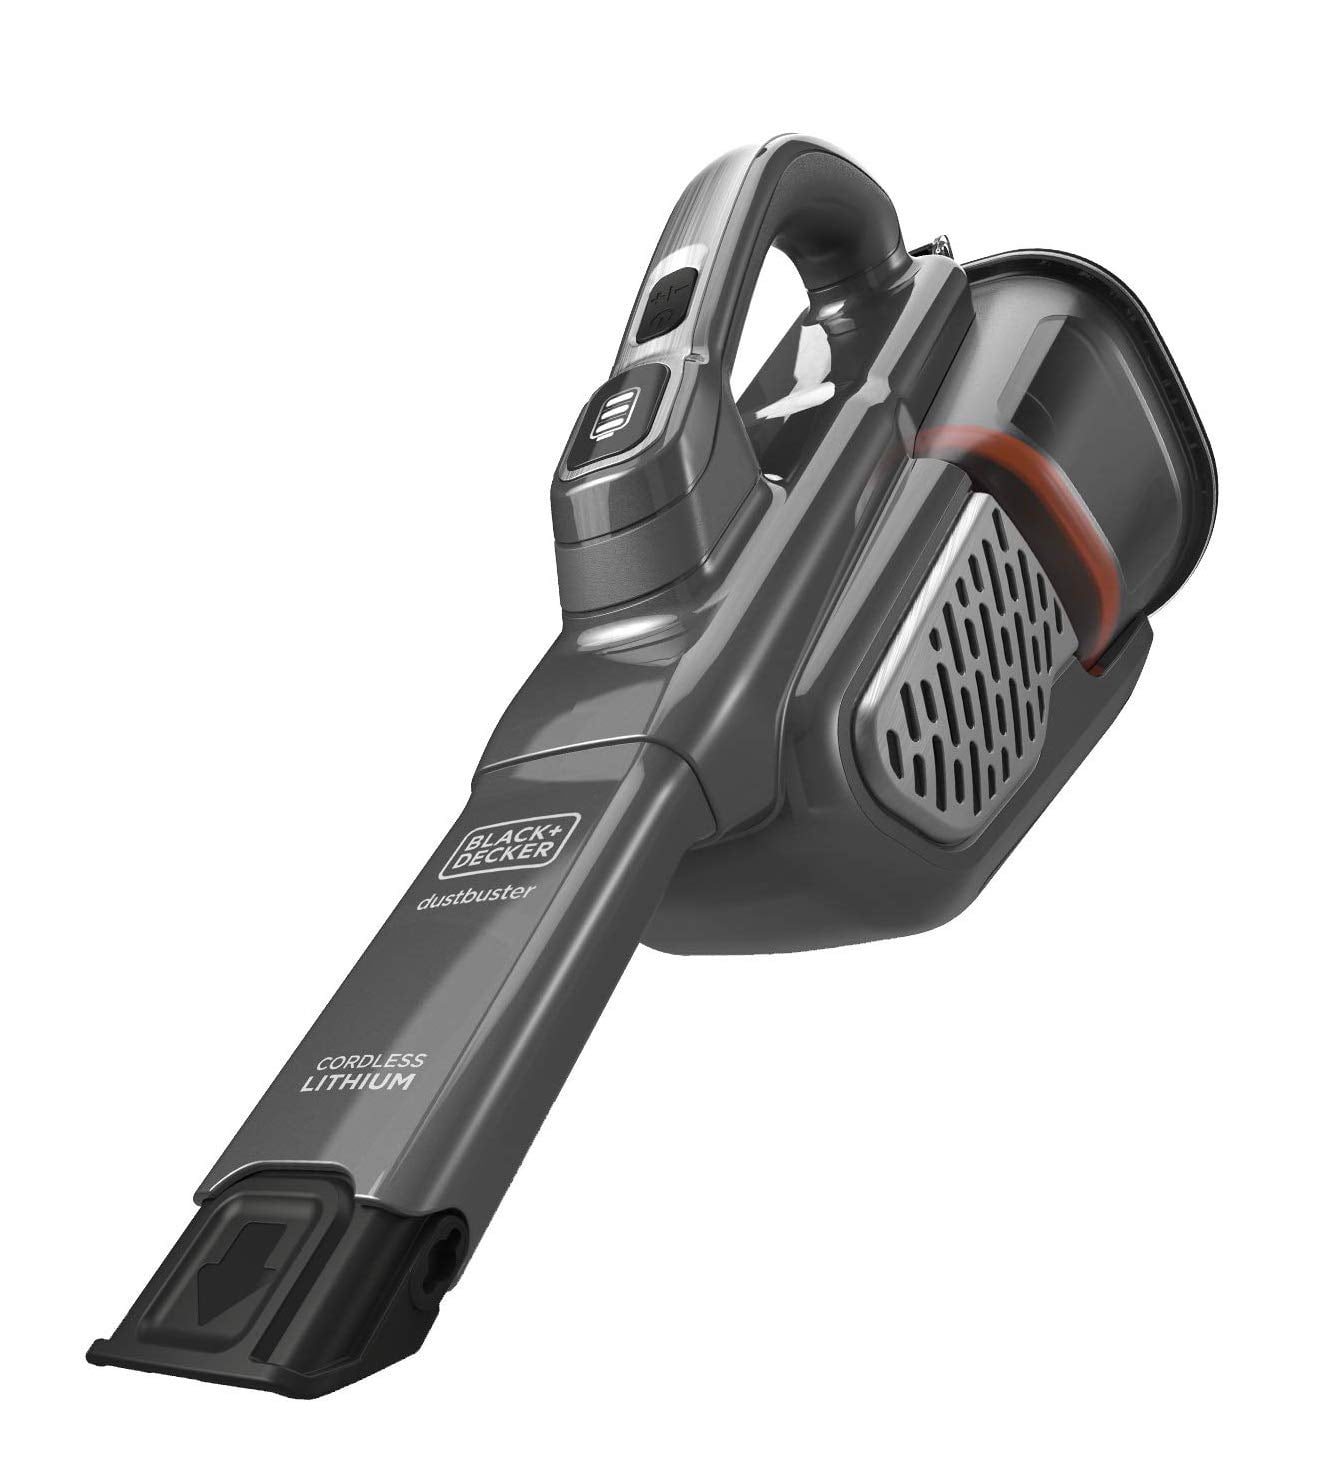 Black+decker Dustbuster Handheld Vacuum Cordless AdvancedClean+ White HHVK320J10